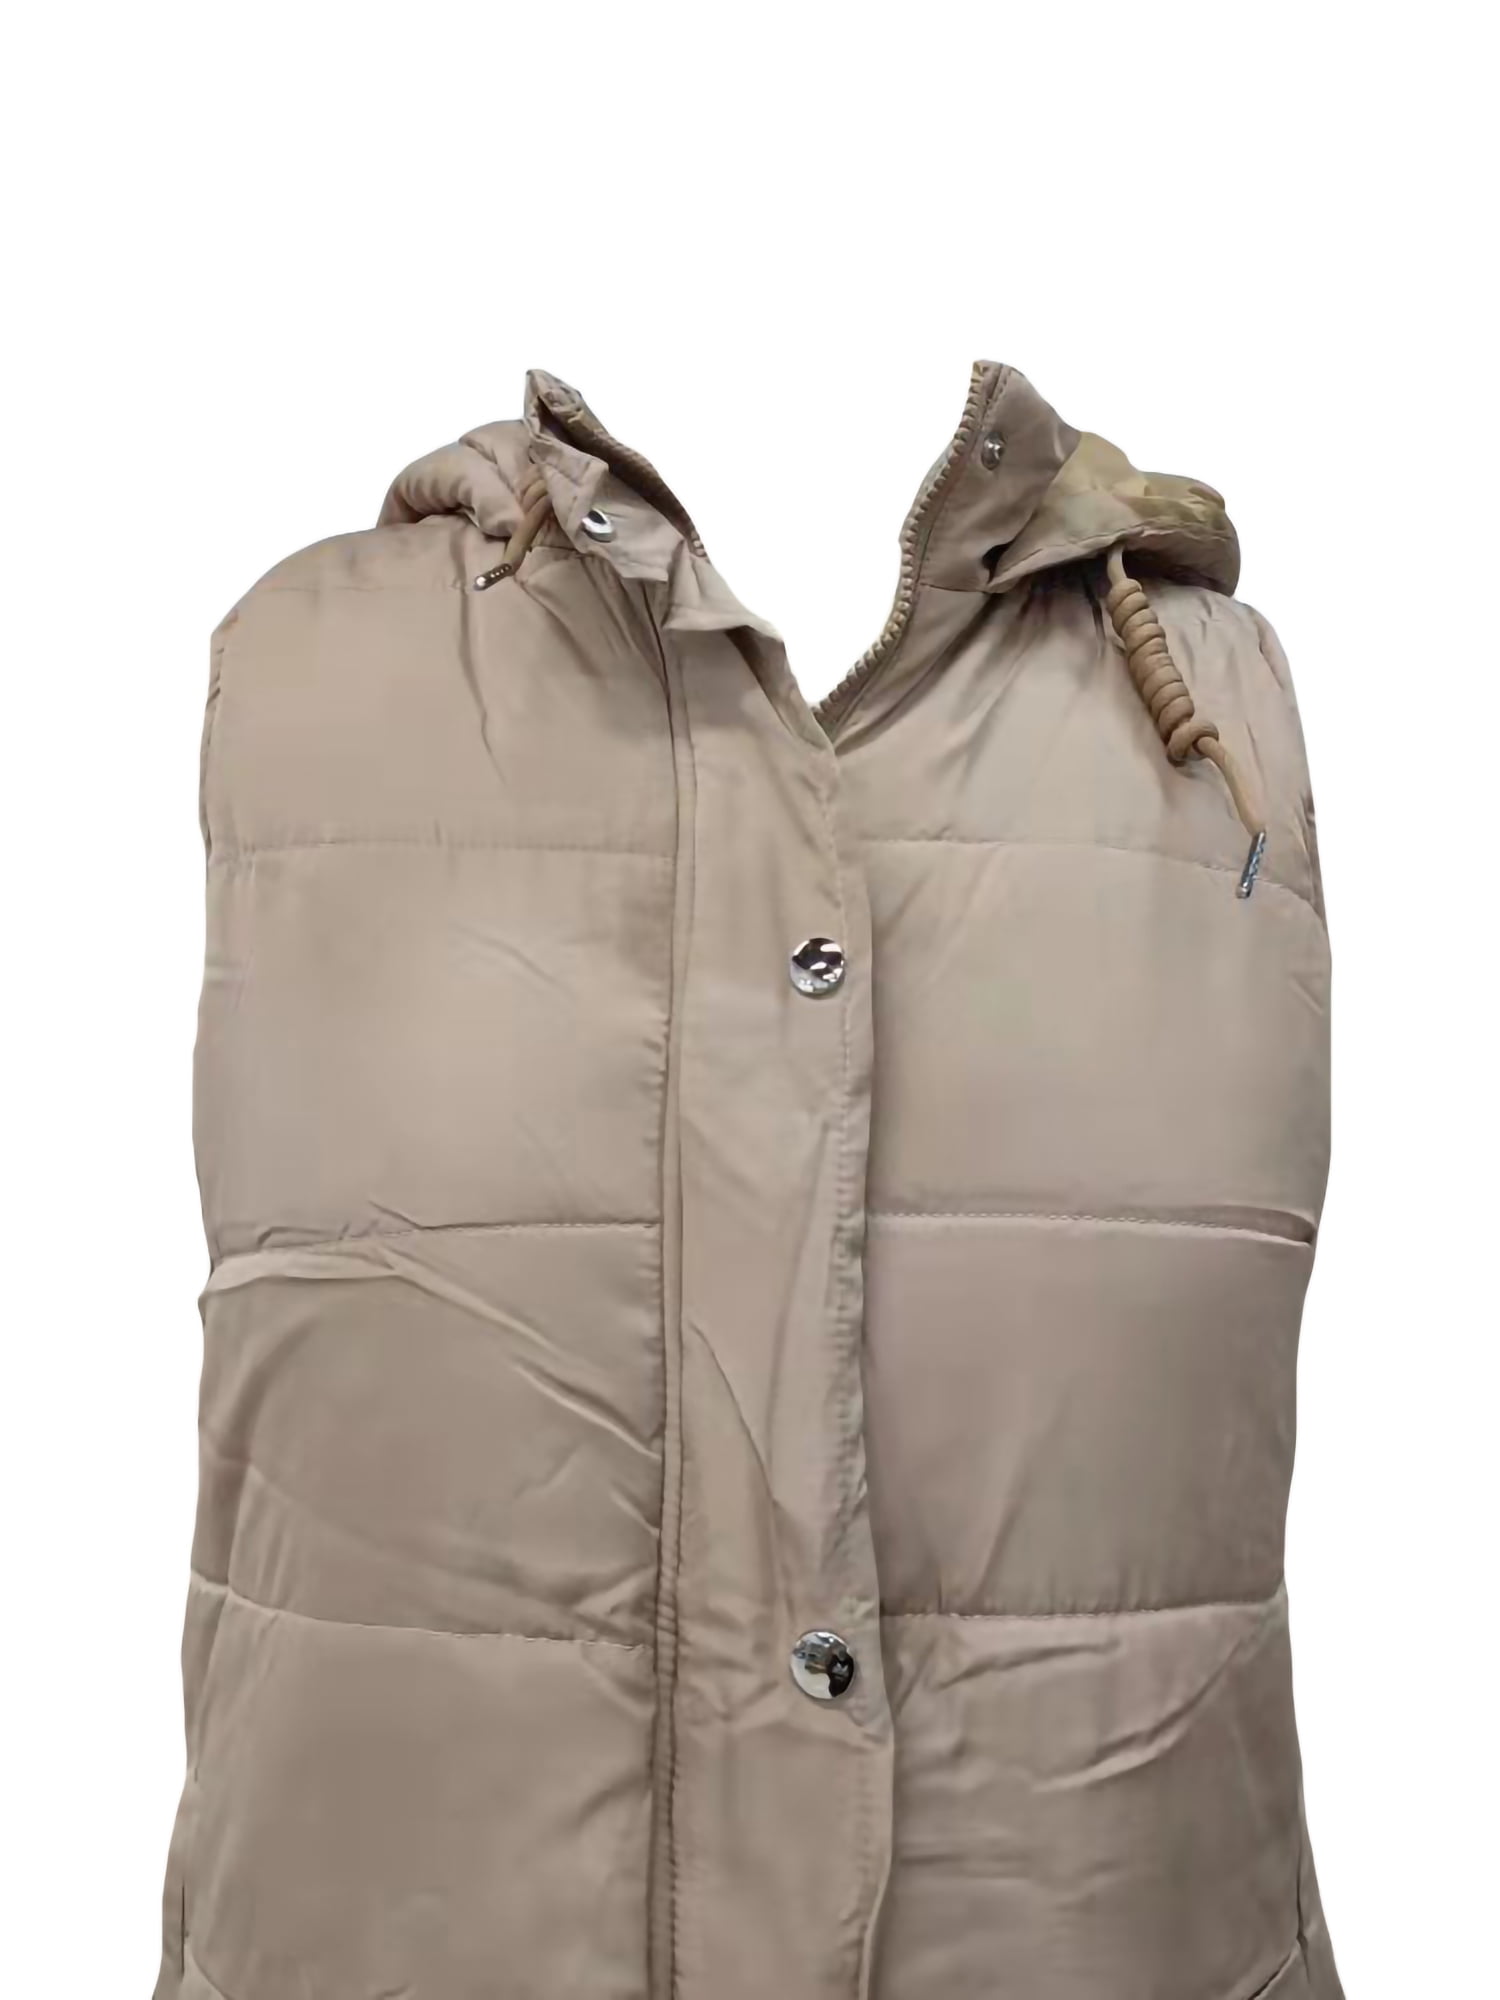 LSFYSZD Women Waistcoat Hooded Neck Sleeveless Zip Vest Tops Winter Coat